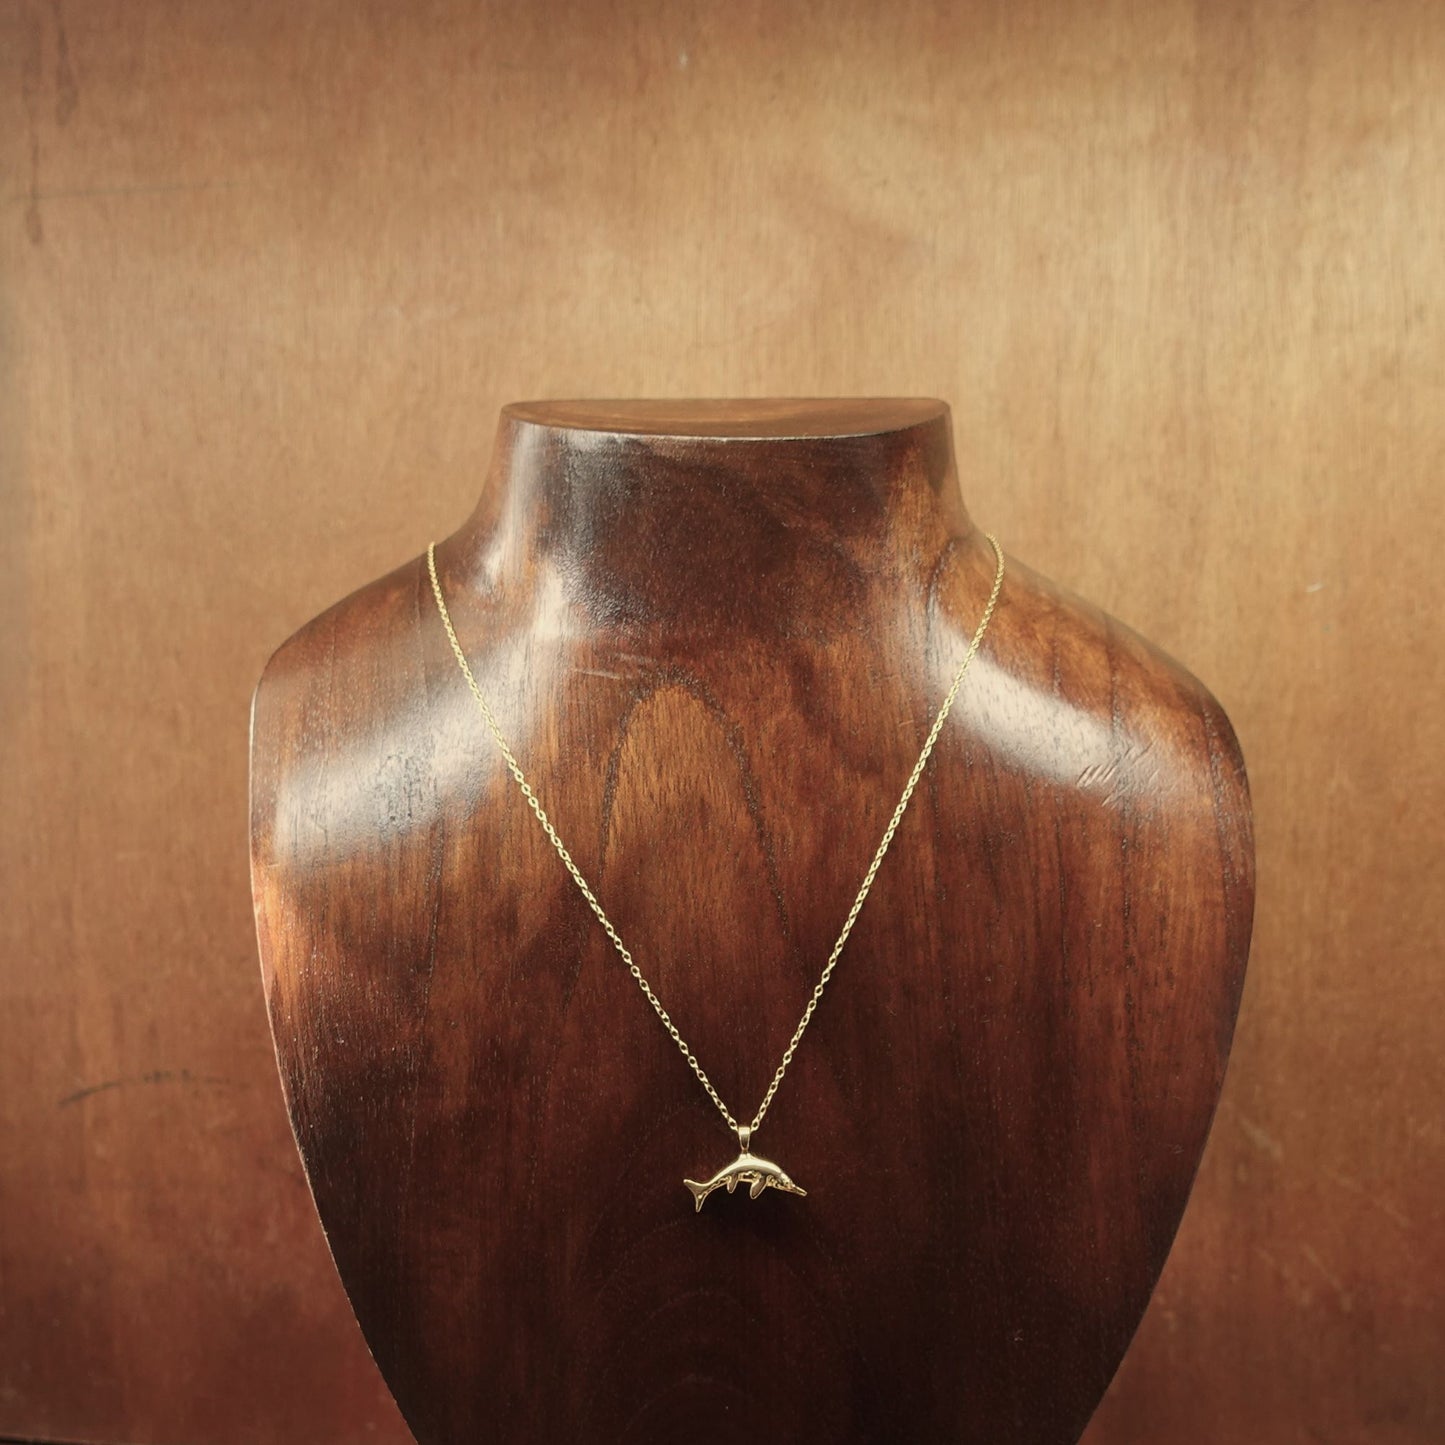 Gold vermeil Ichthyosaur charm pendant and chain. © Adrian Ashley